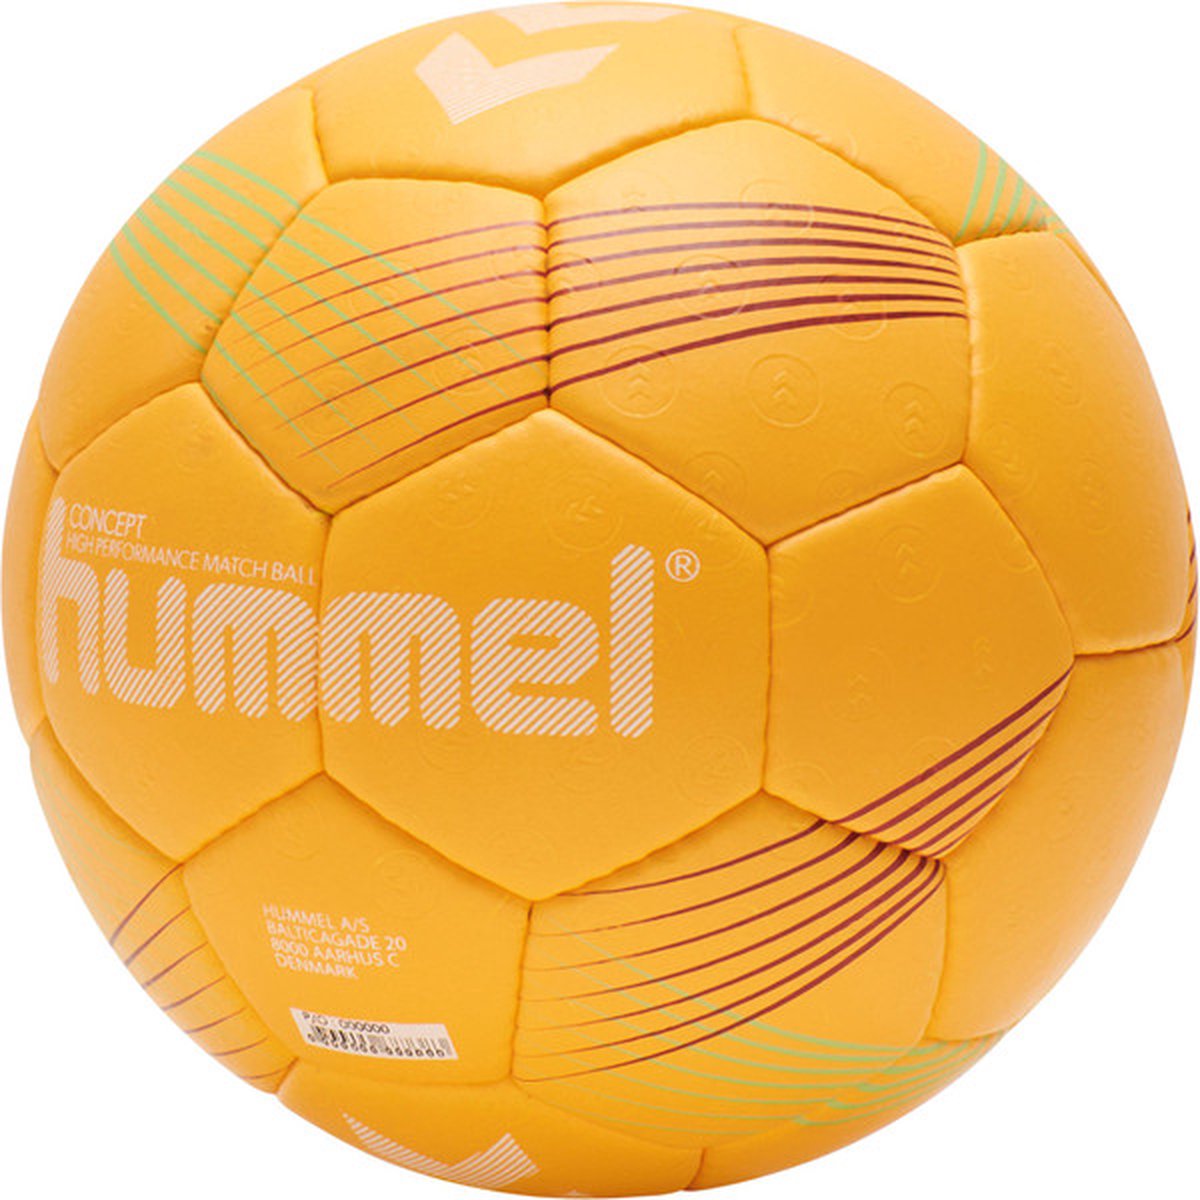 Hummel Concept - Handballen - oranje/rood